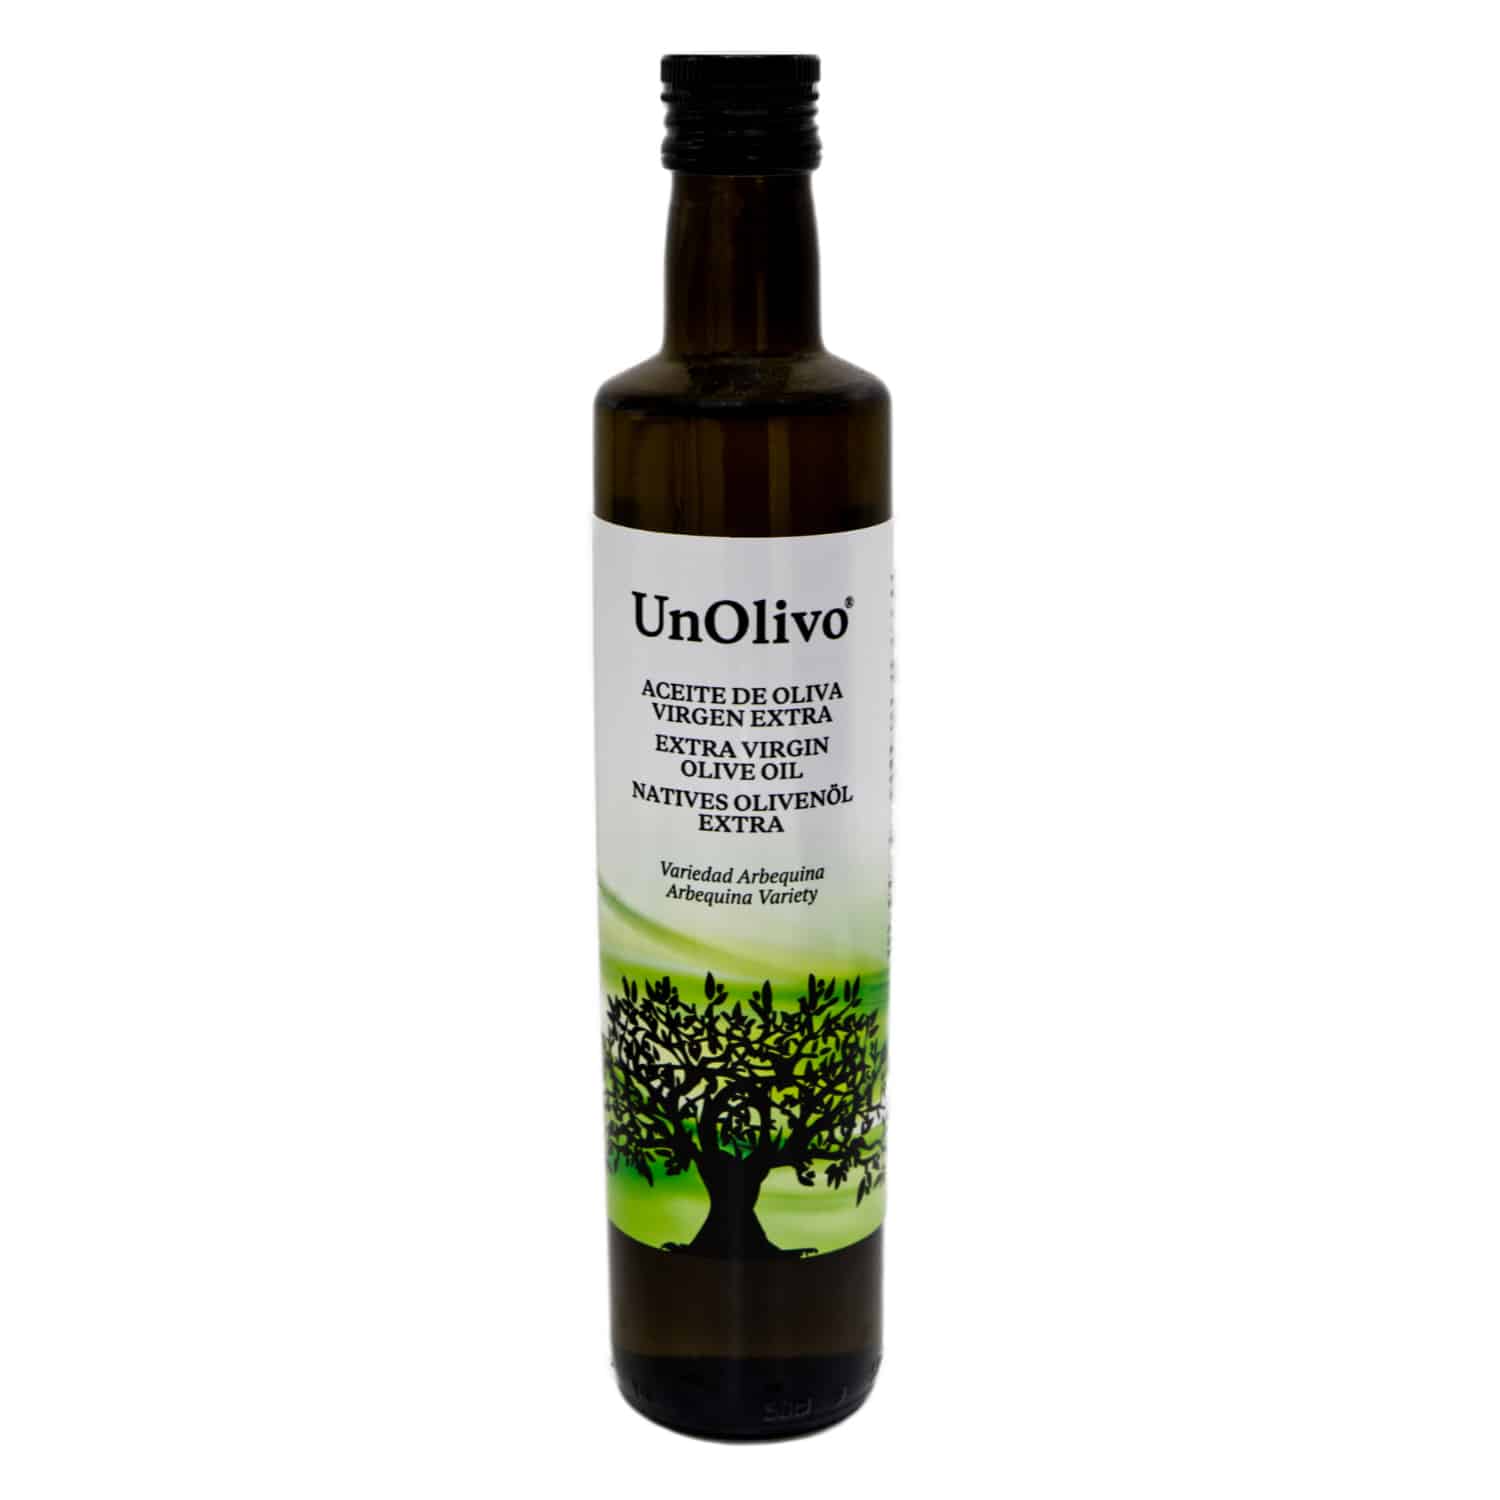 aceite de oliva virgen extra unolivo natives olivenoel extra 05l front